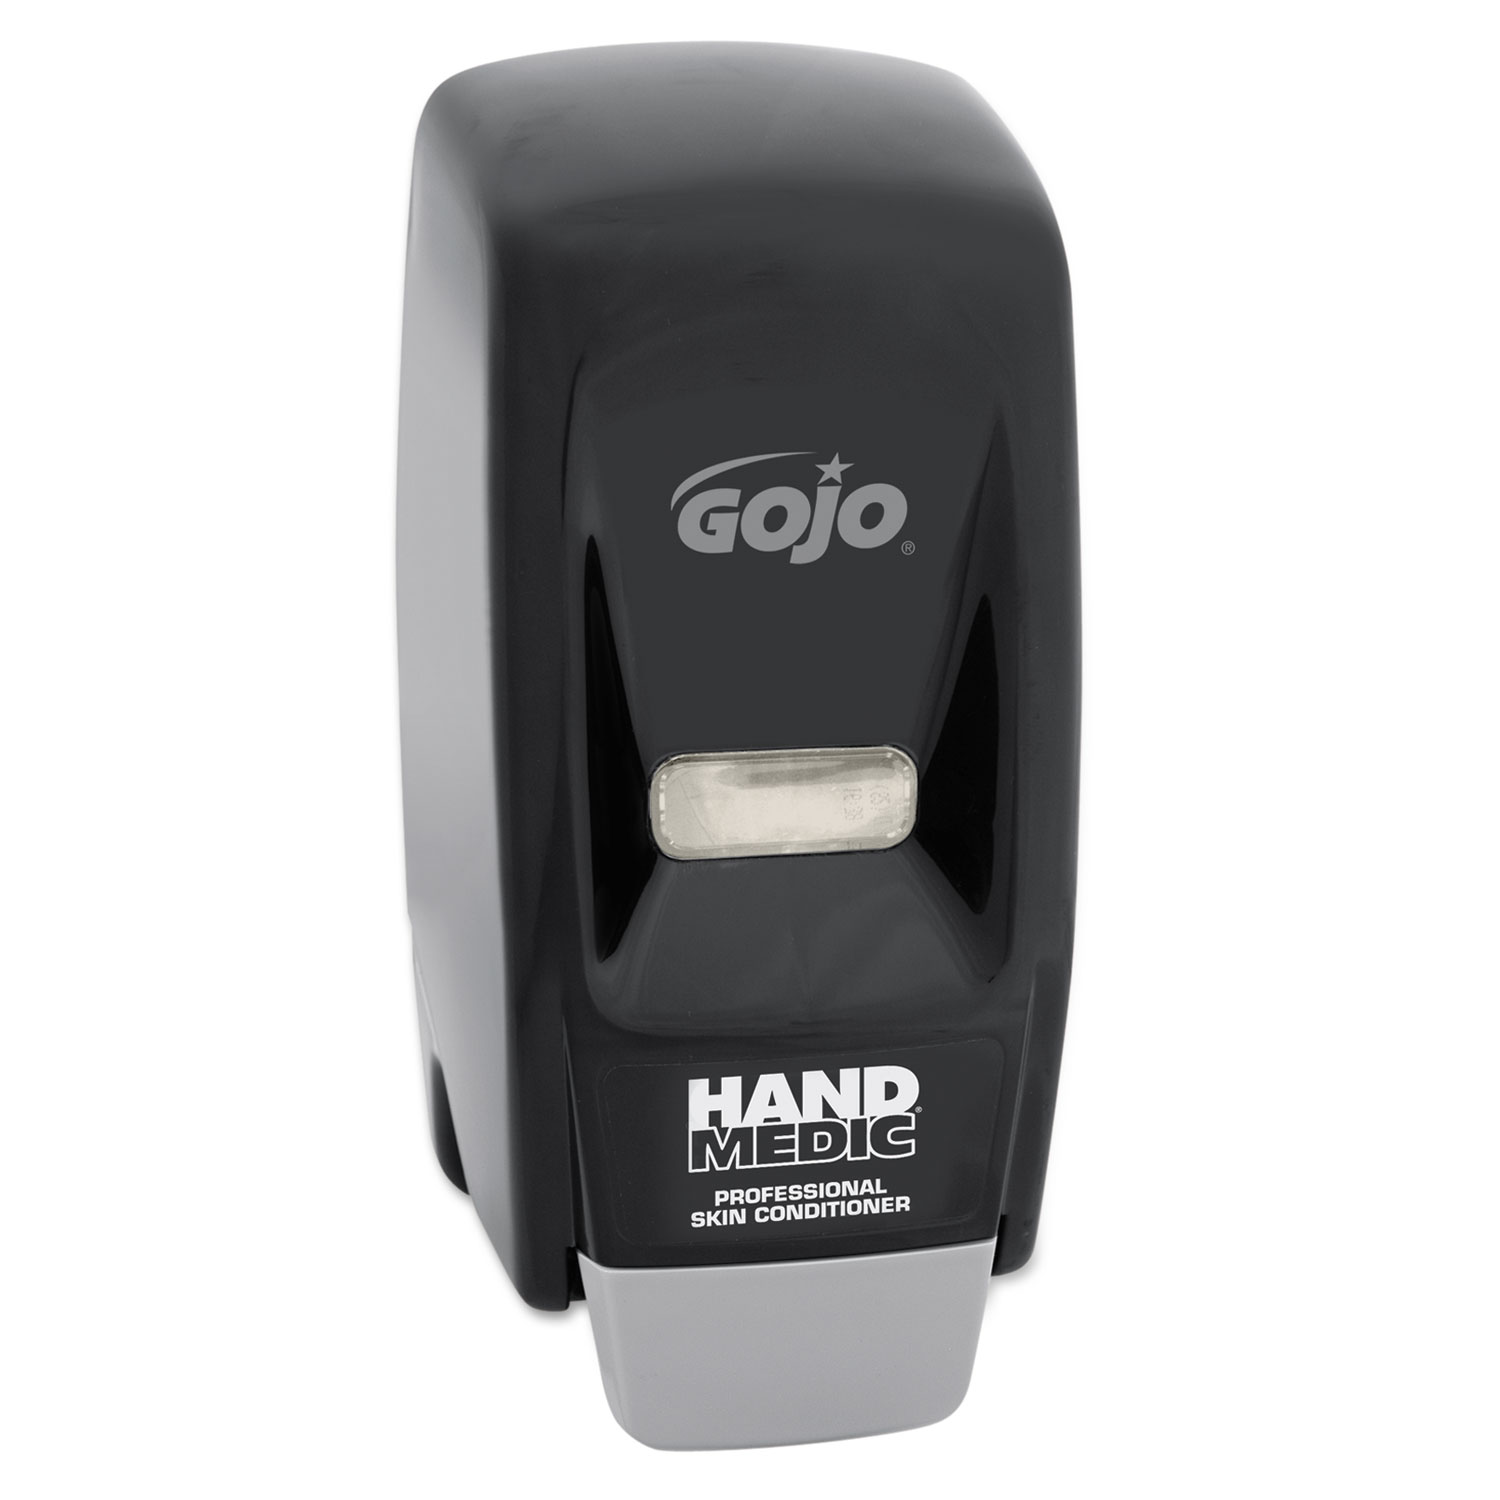 HAND MEDIC Professional Skin Conditioner, 500 mL Refill